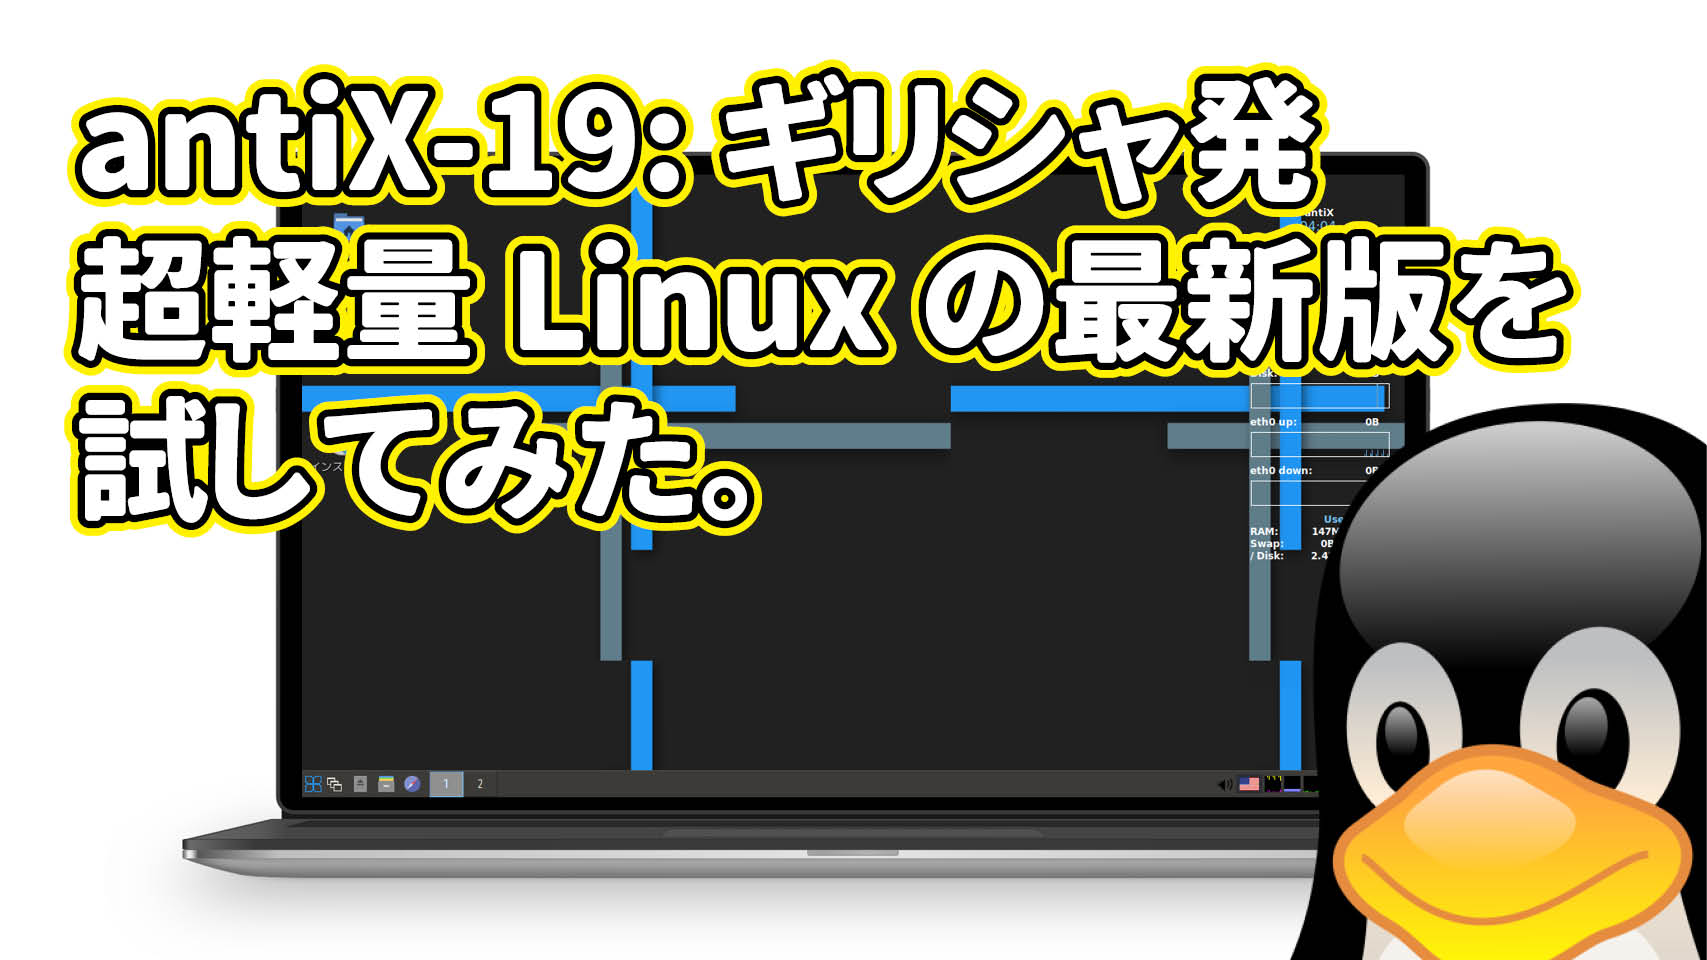 antiX-19: ギリシャ発の超軽量 Linux を試してみた。